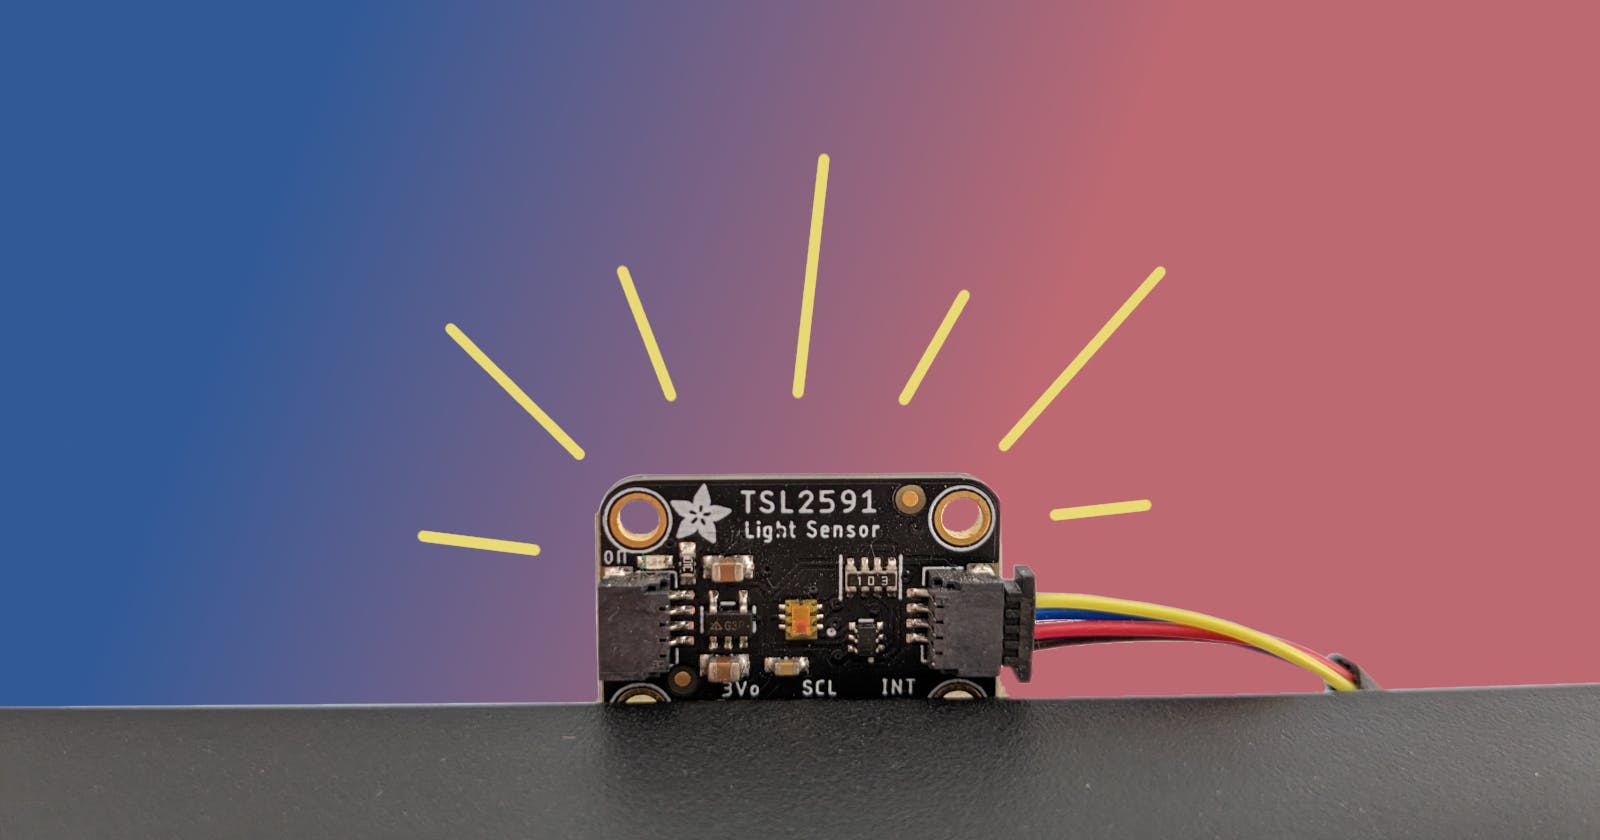 I made a monitor brightness controller using an Arduino-powered light sensor